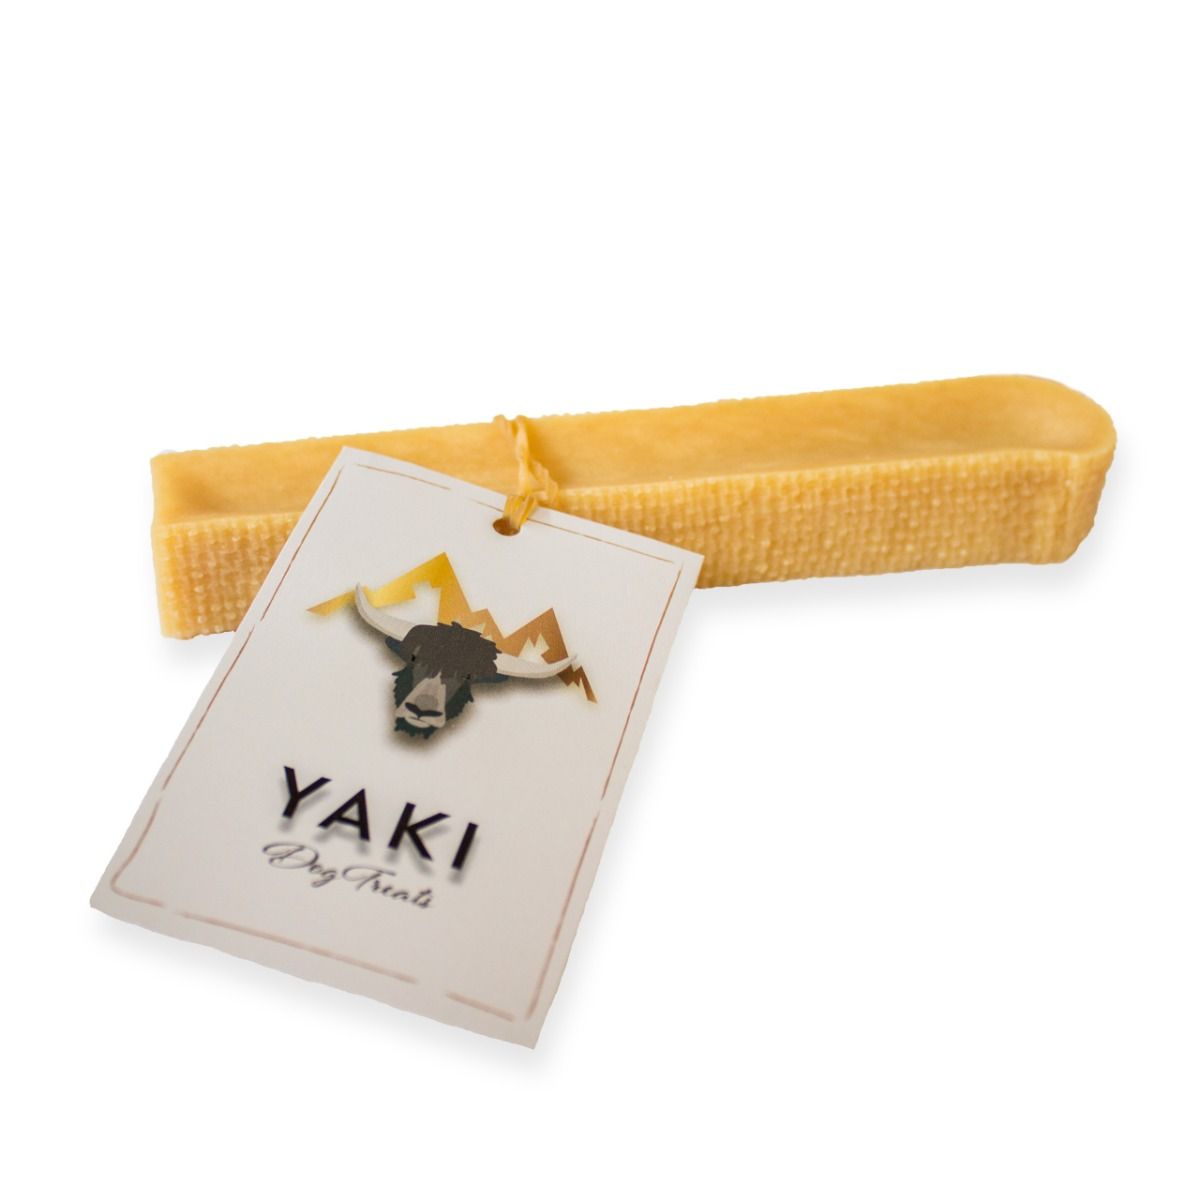 Yaki - Cheese Dog snack 60-69g M - (01-501) - Kjæledyr og utstyr